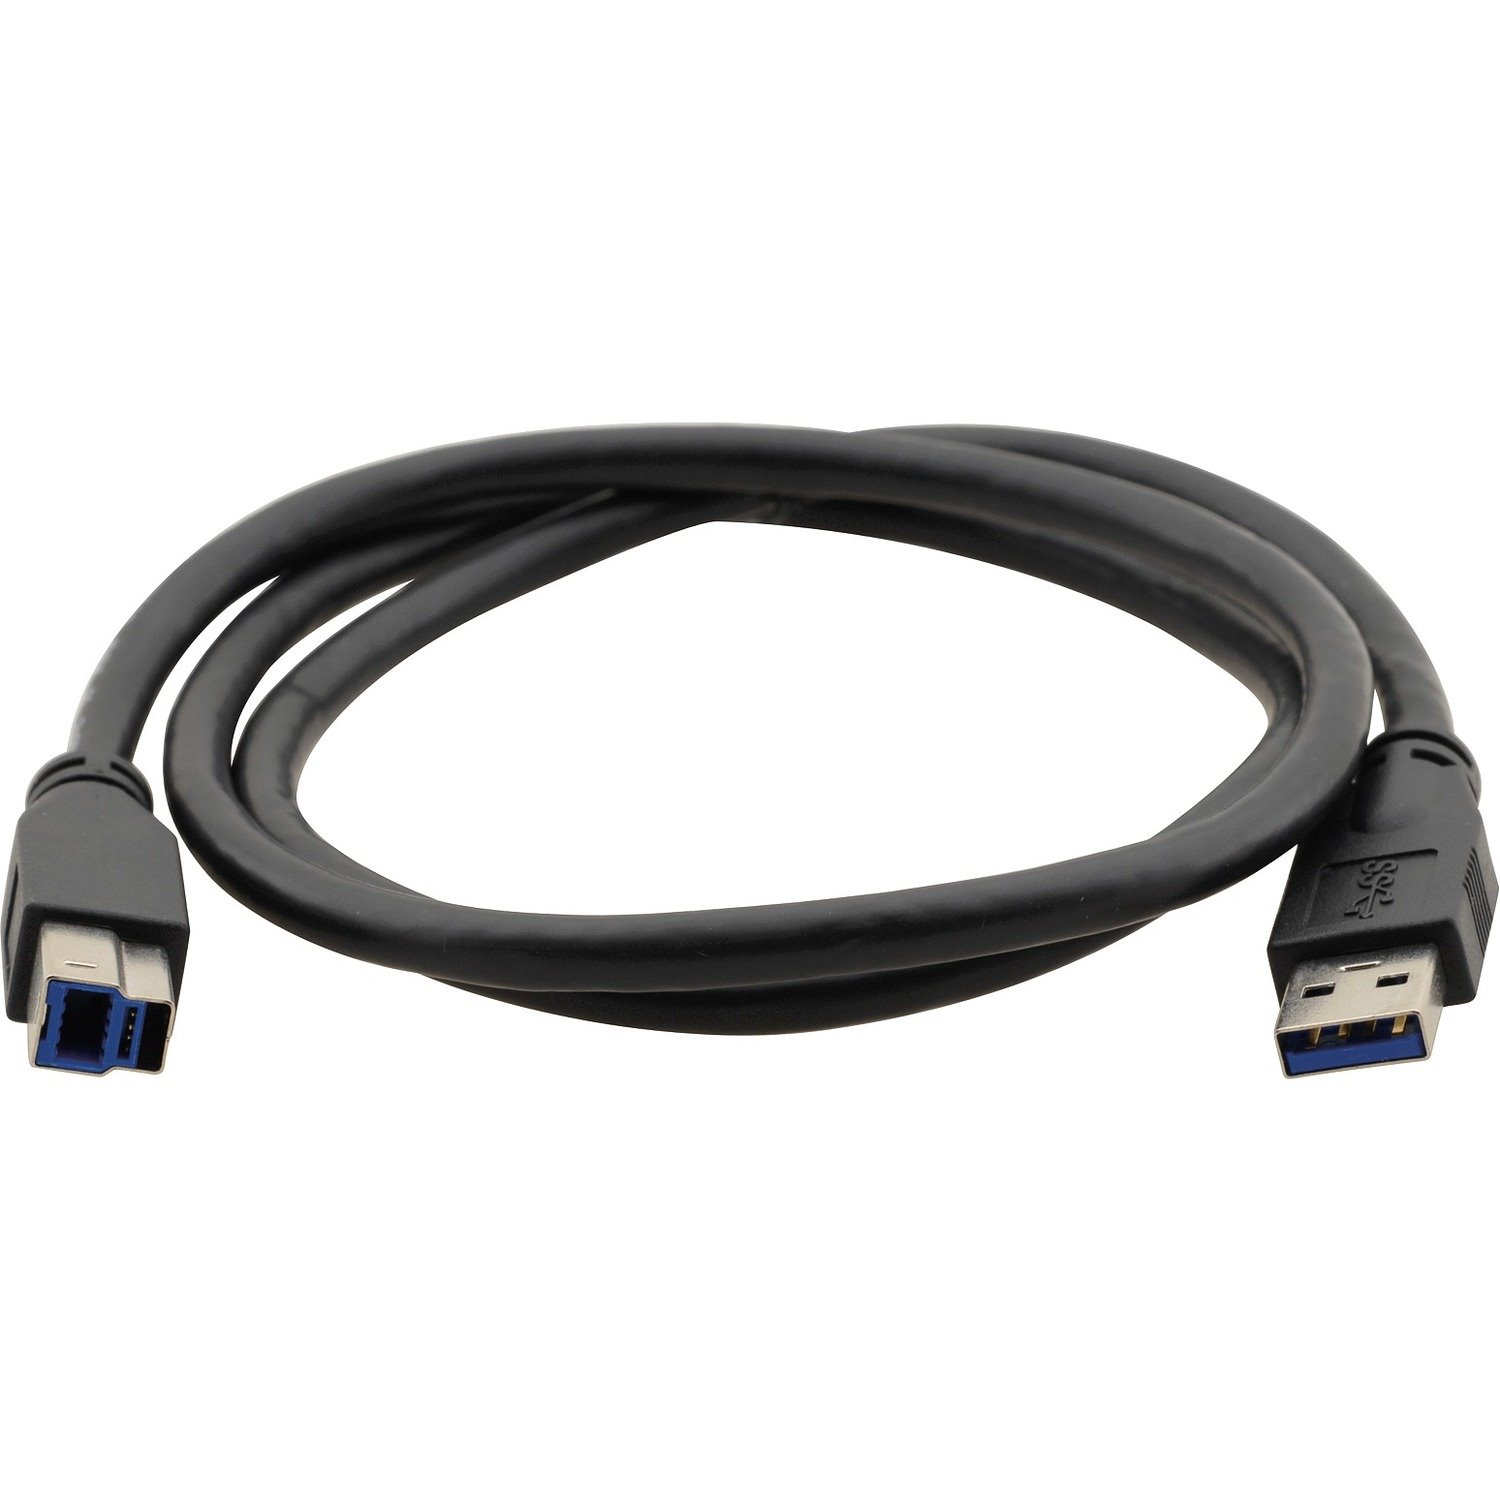 Kramer C-USB3/AB-3 91.44 cm USB Data Transfer Cable